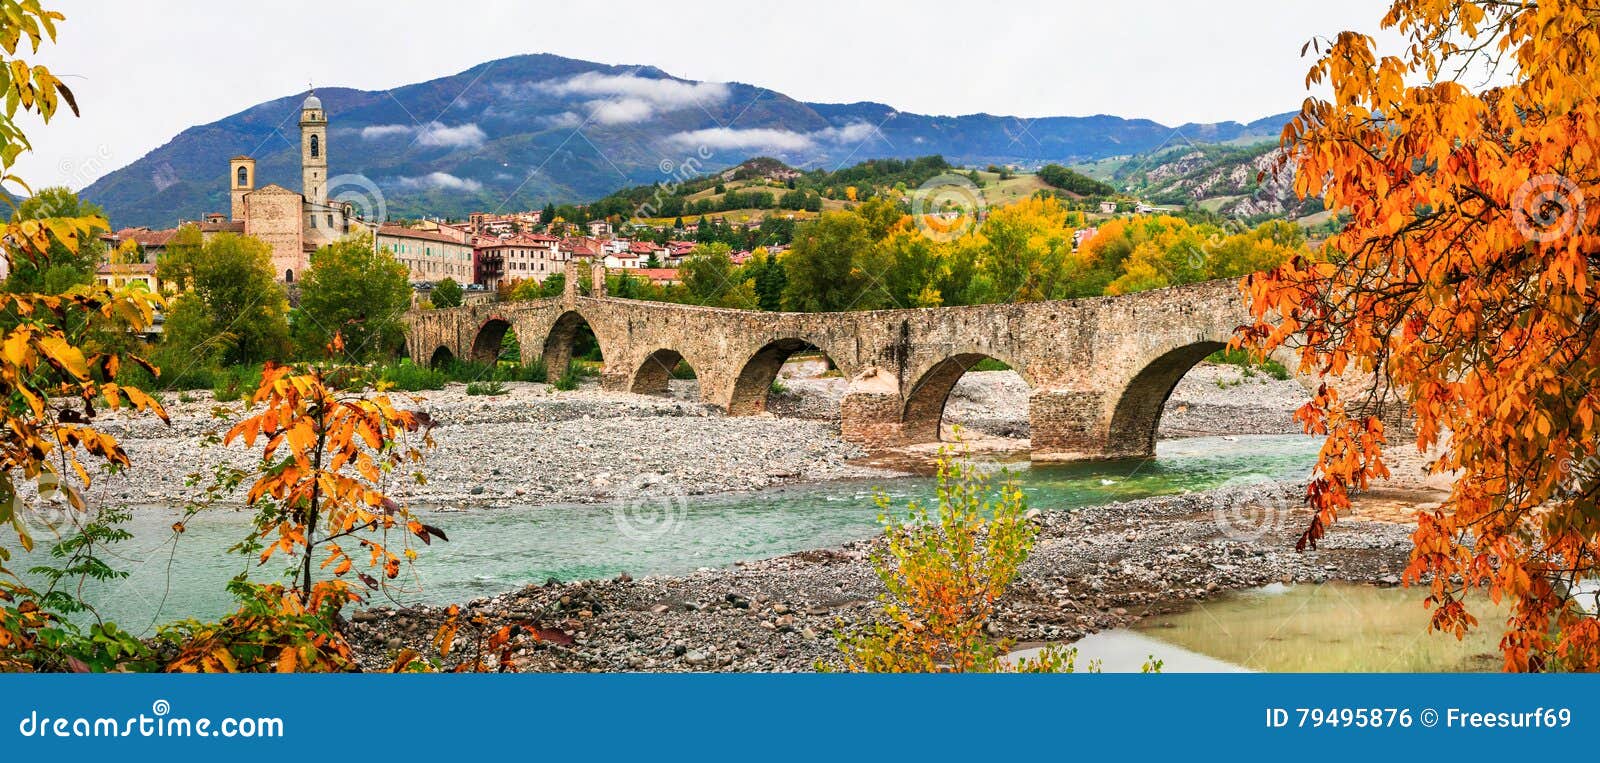 bobbio - beautiful ancient town with impressive roman bridge, it